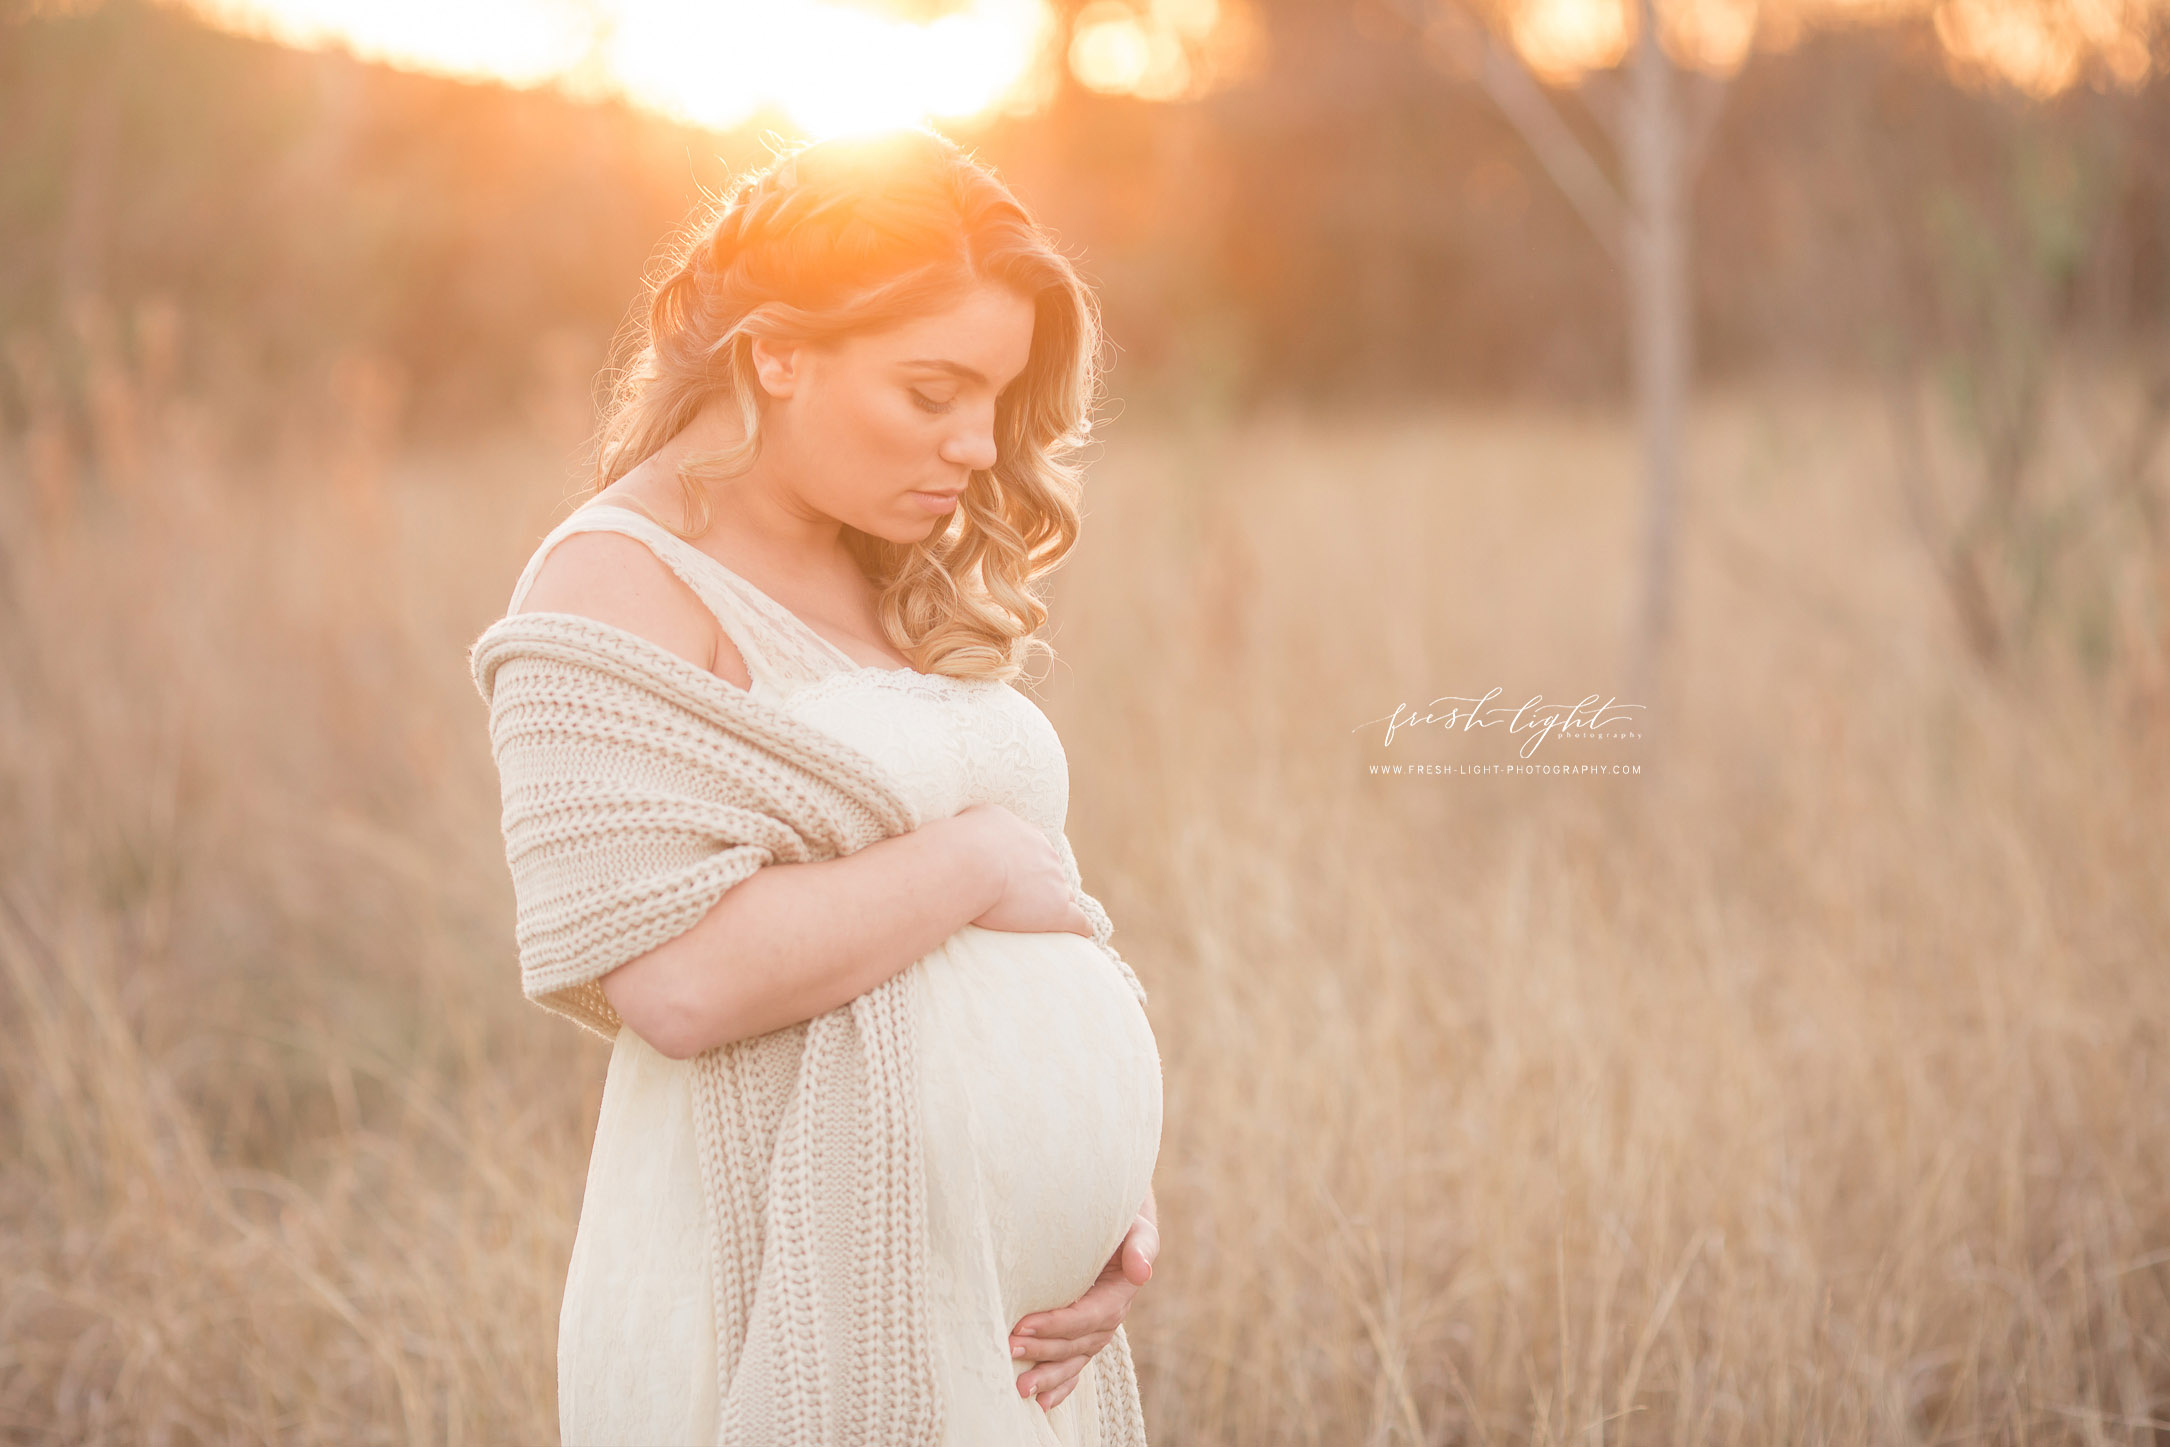 houston maternity photographer | Fresh light photography